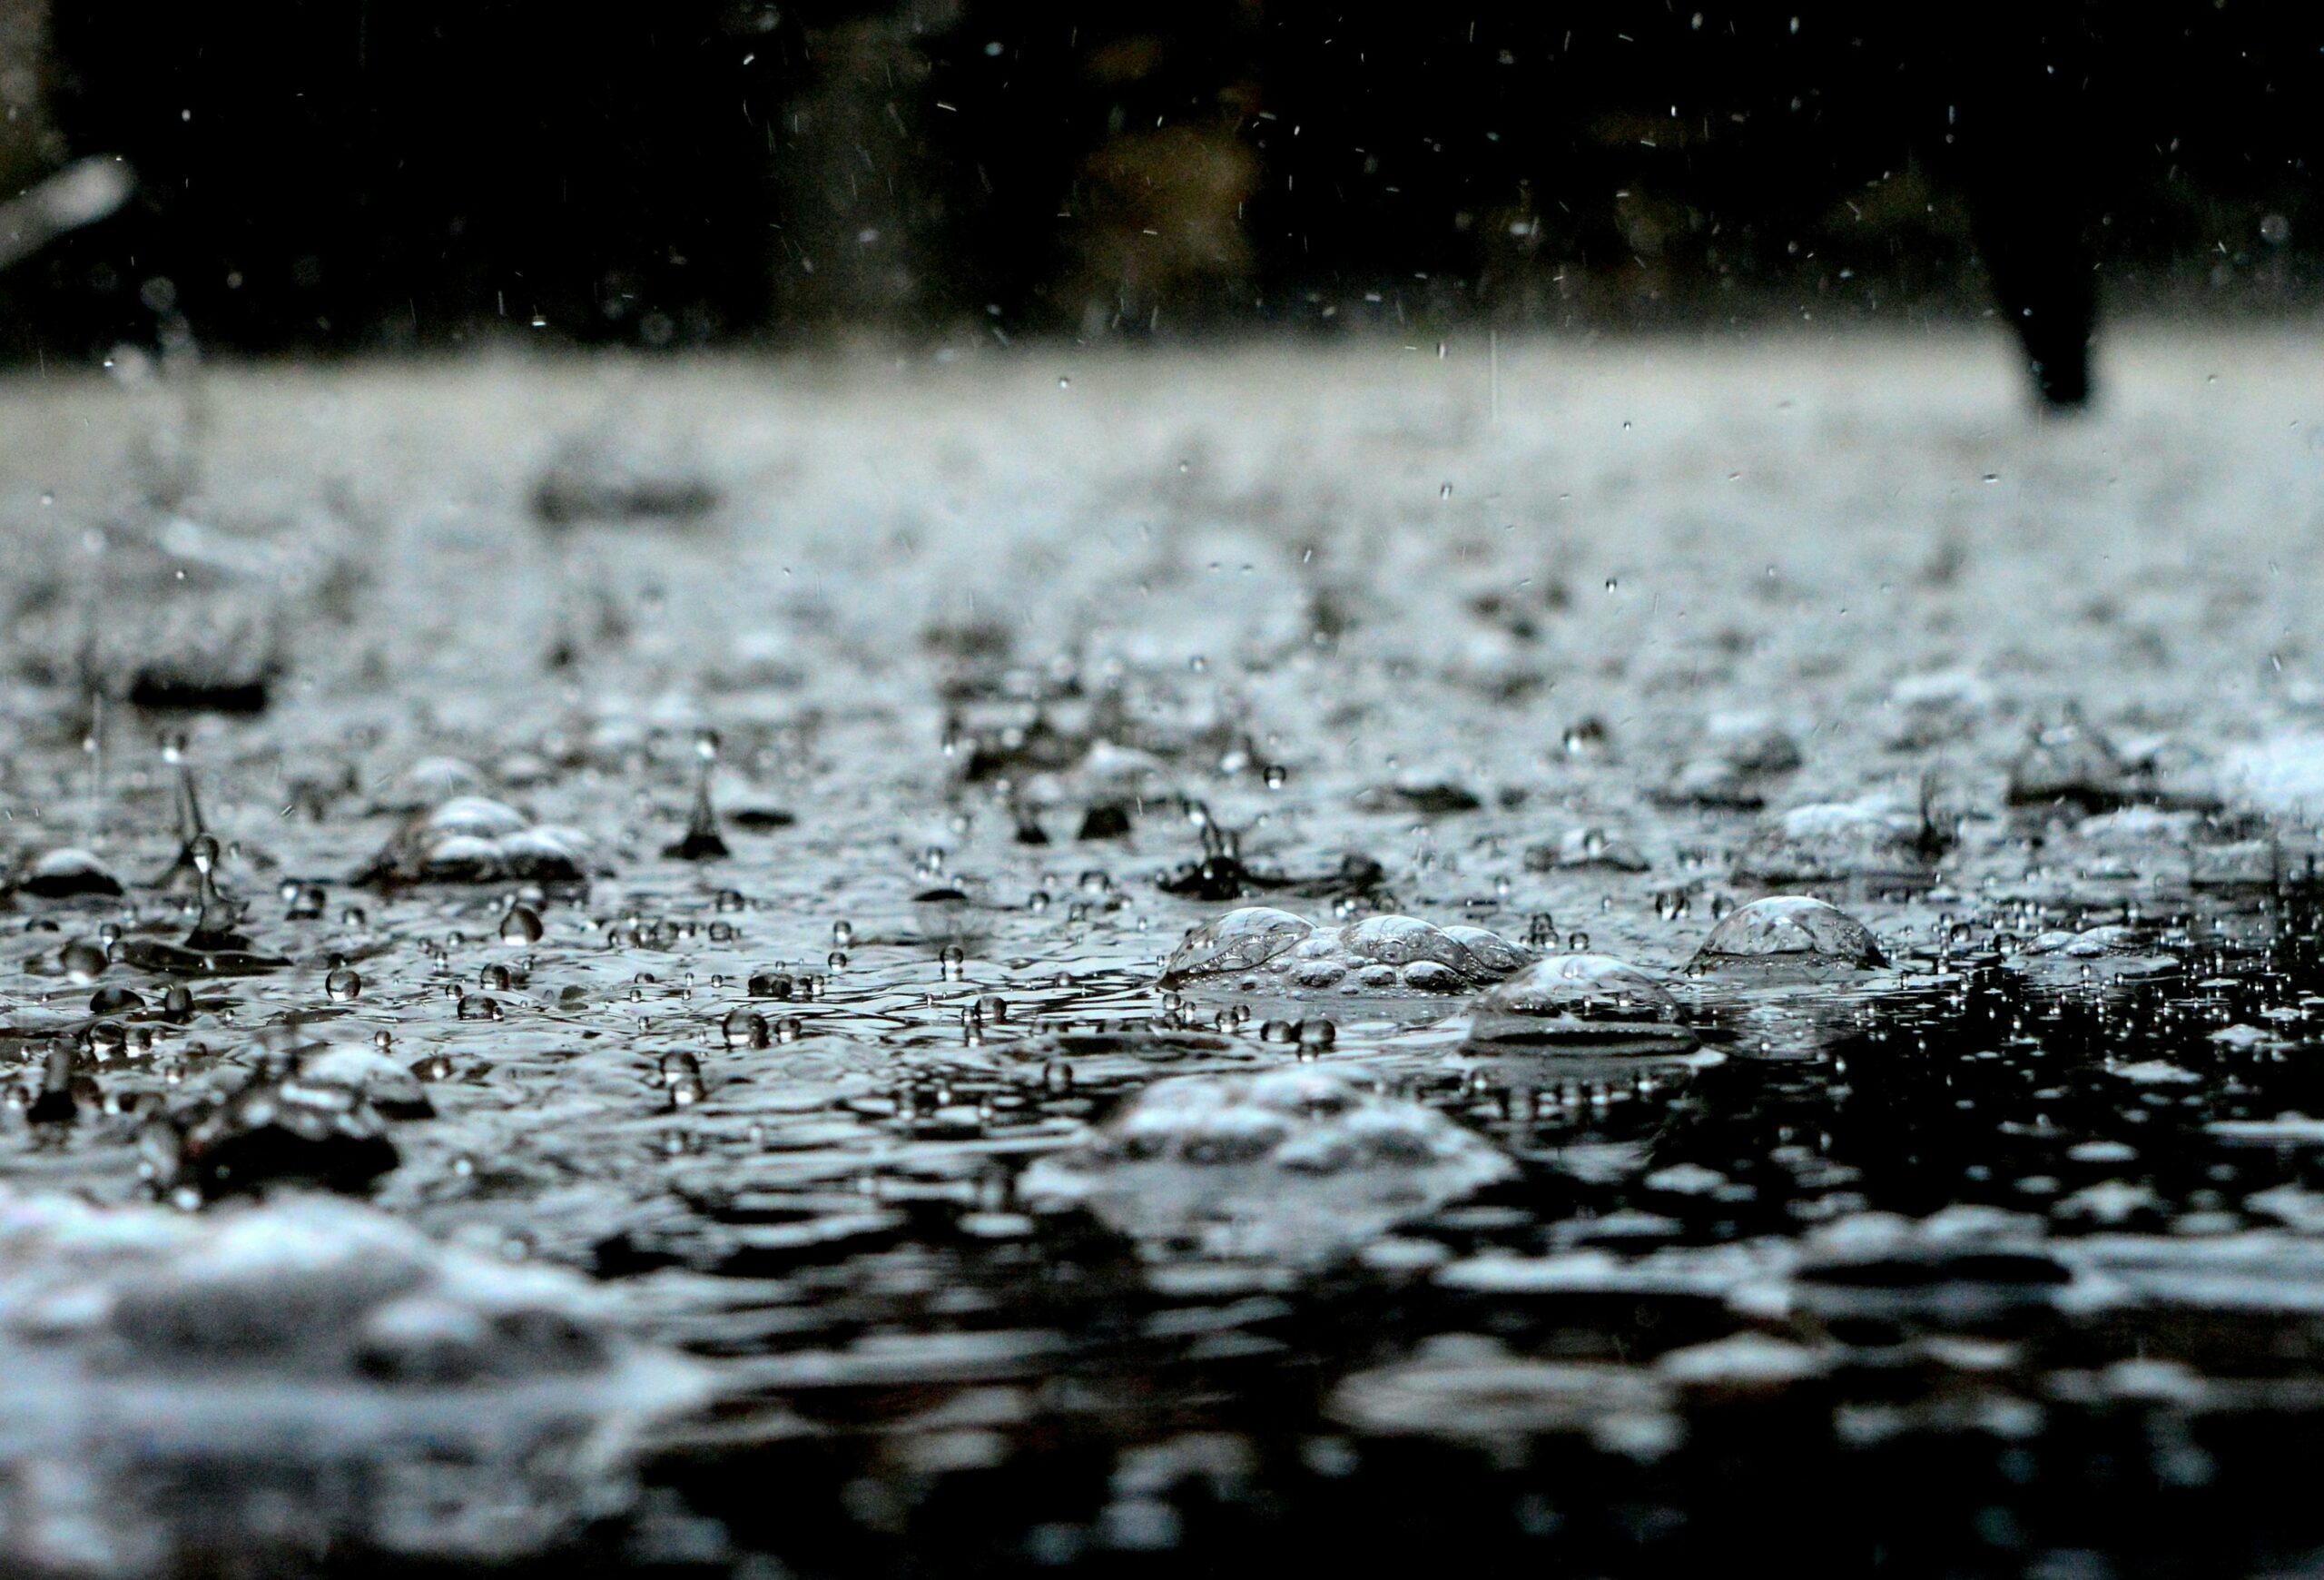 Entre la noche del martes 22 y la mañana del miércoles 23 se registrarán lluvias intensas. Foto: Pexels